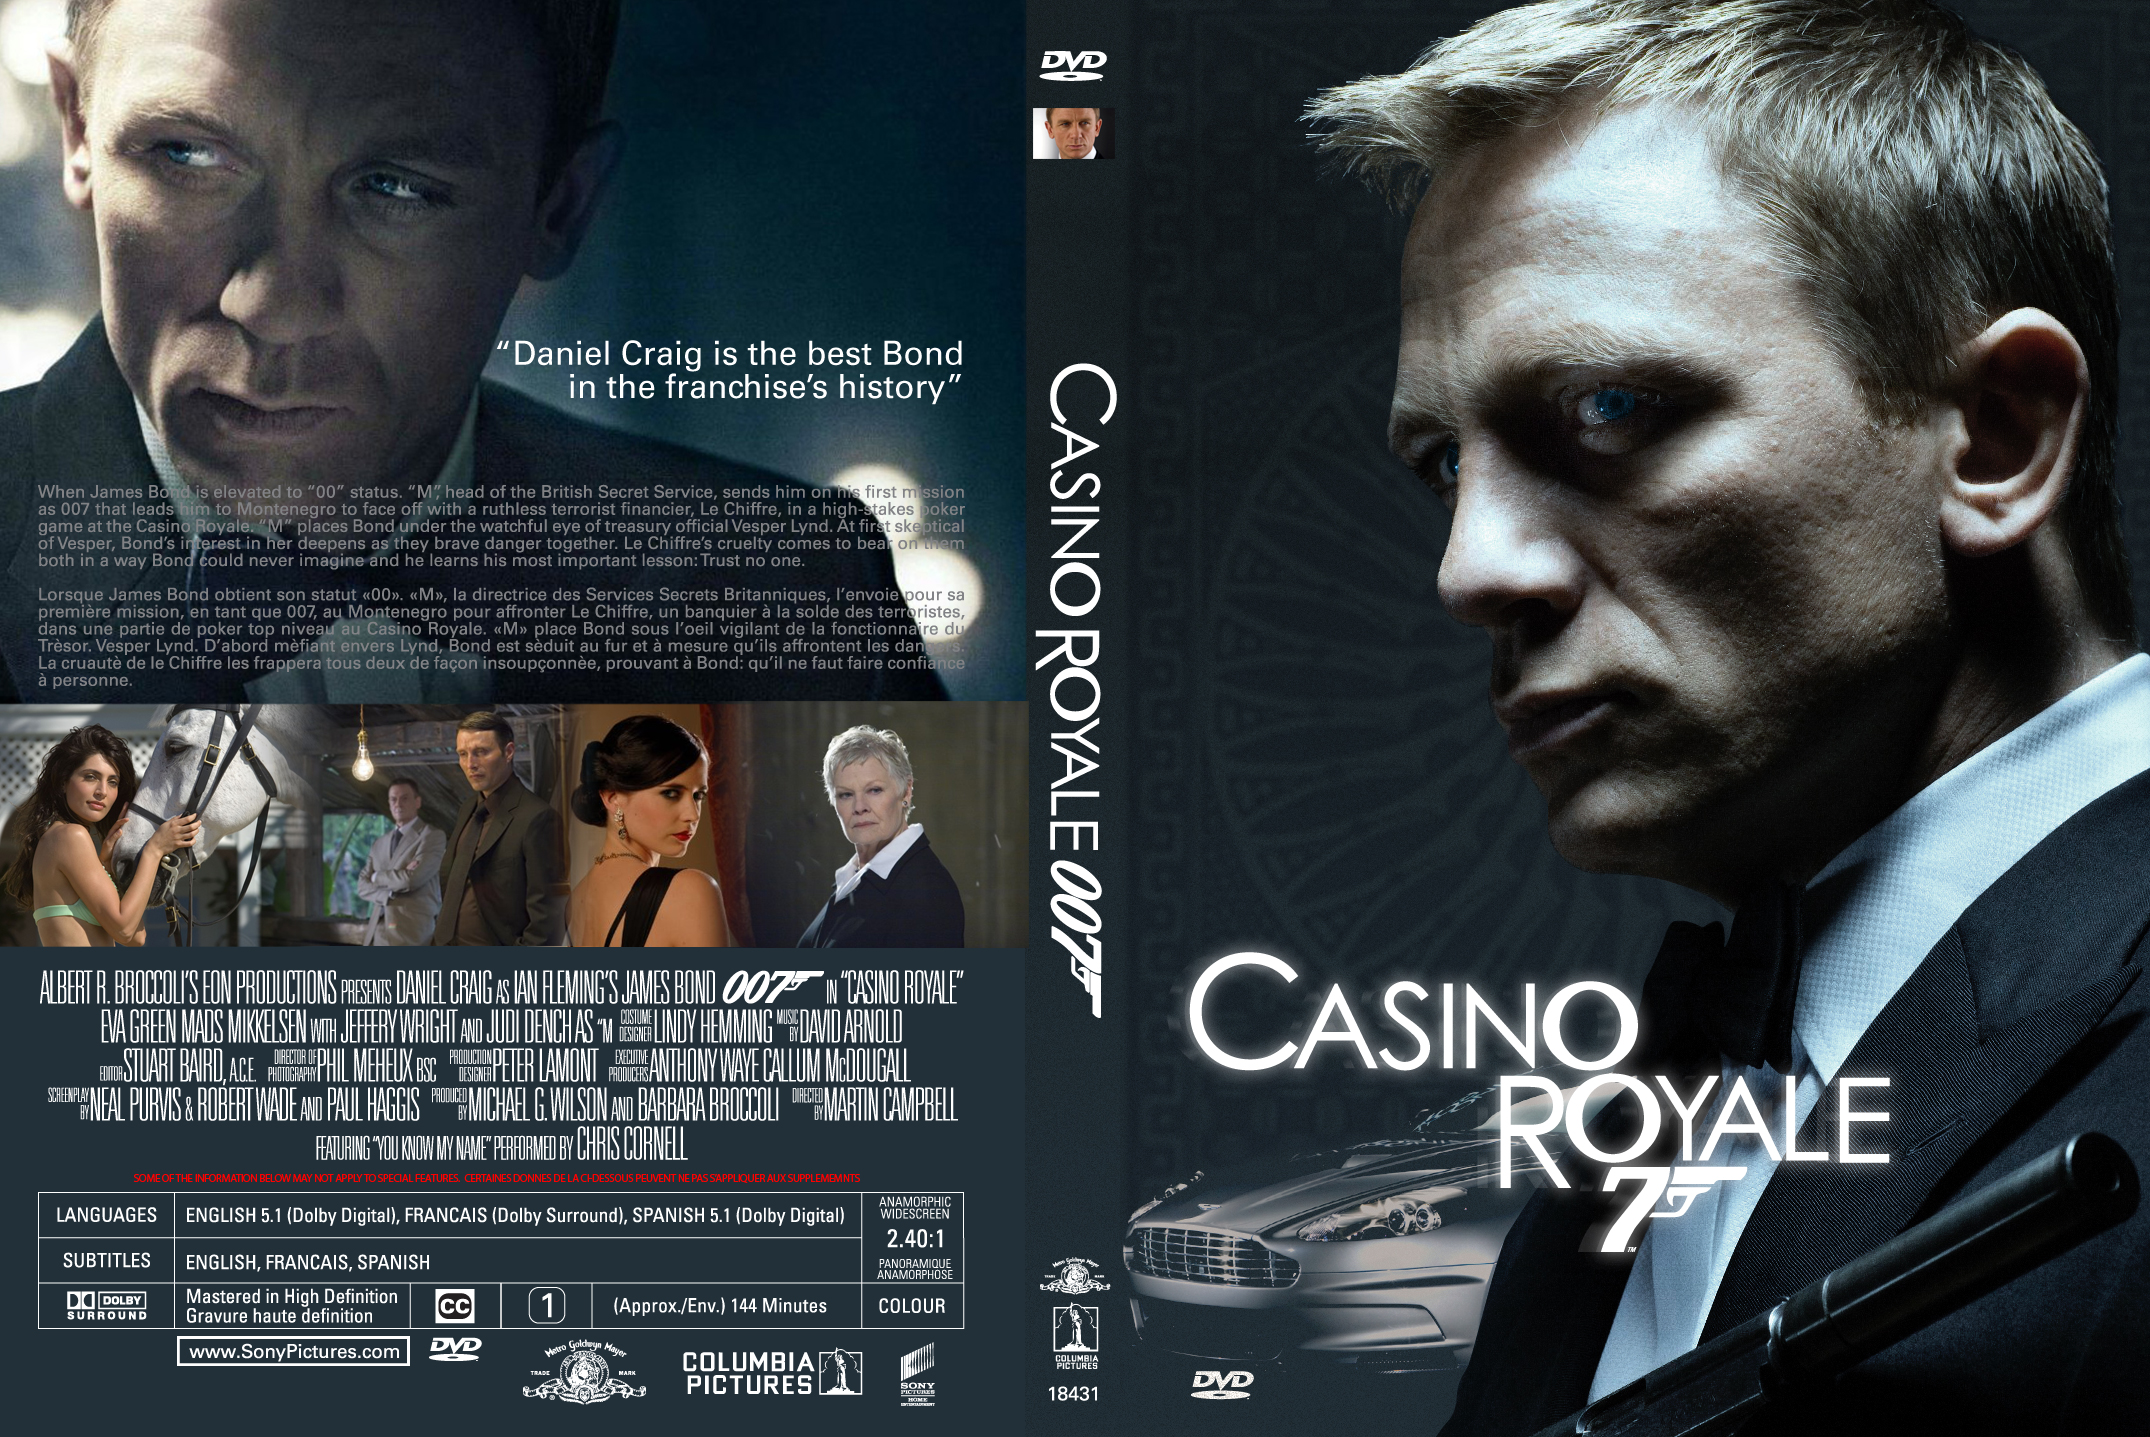 Casino royale watch online in english with subtitles промокод на фриспины джойказино